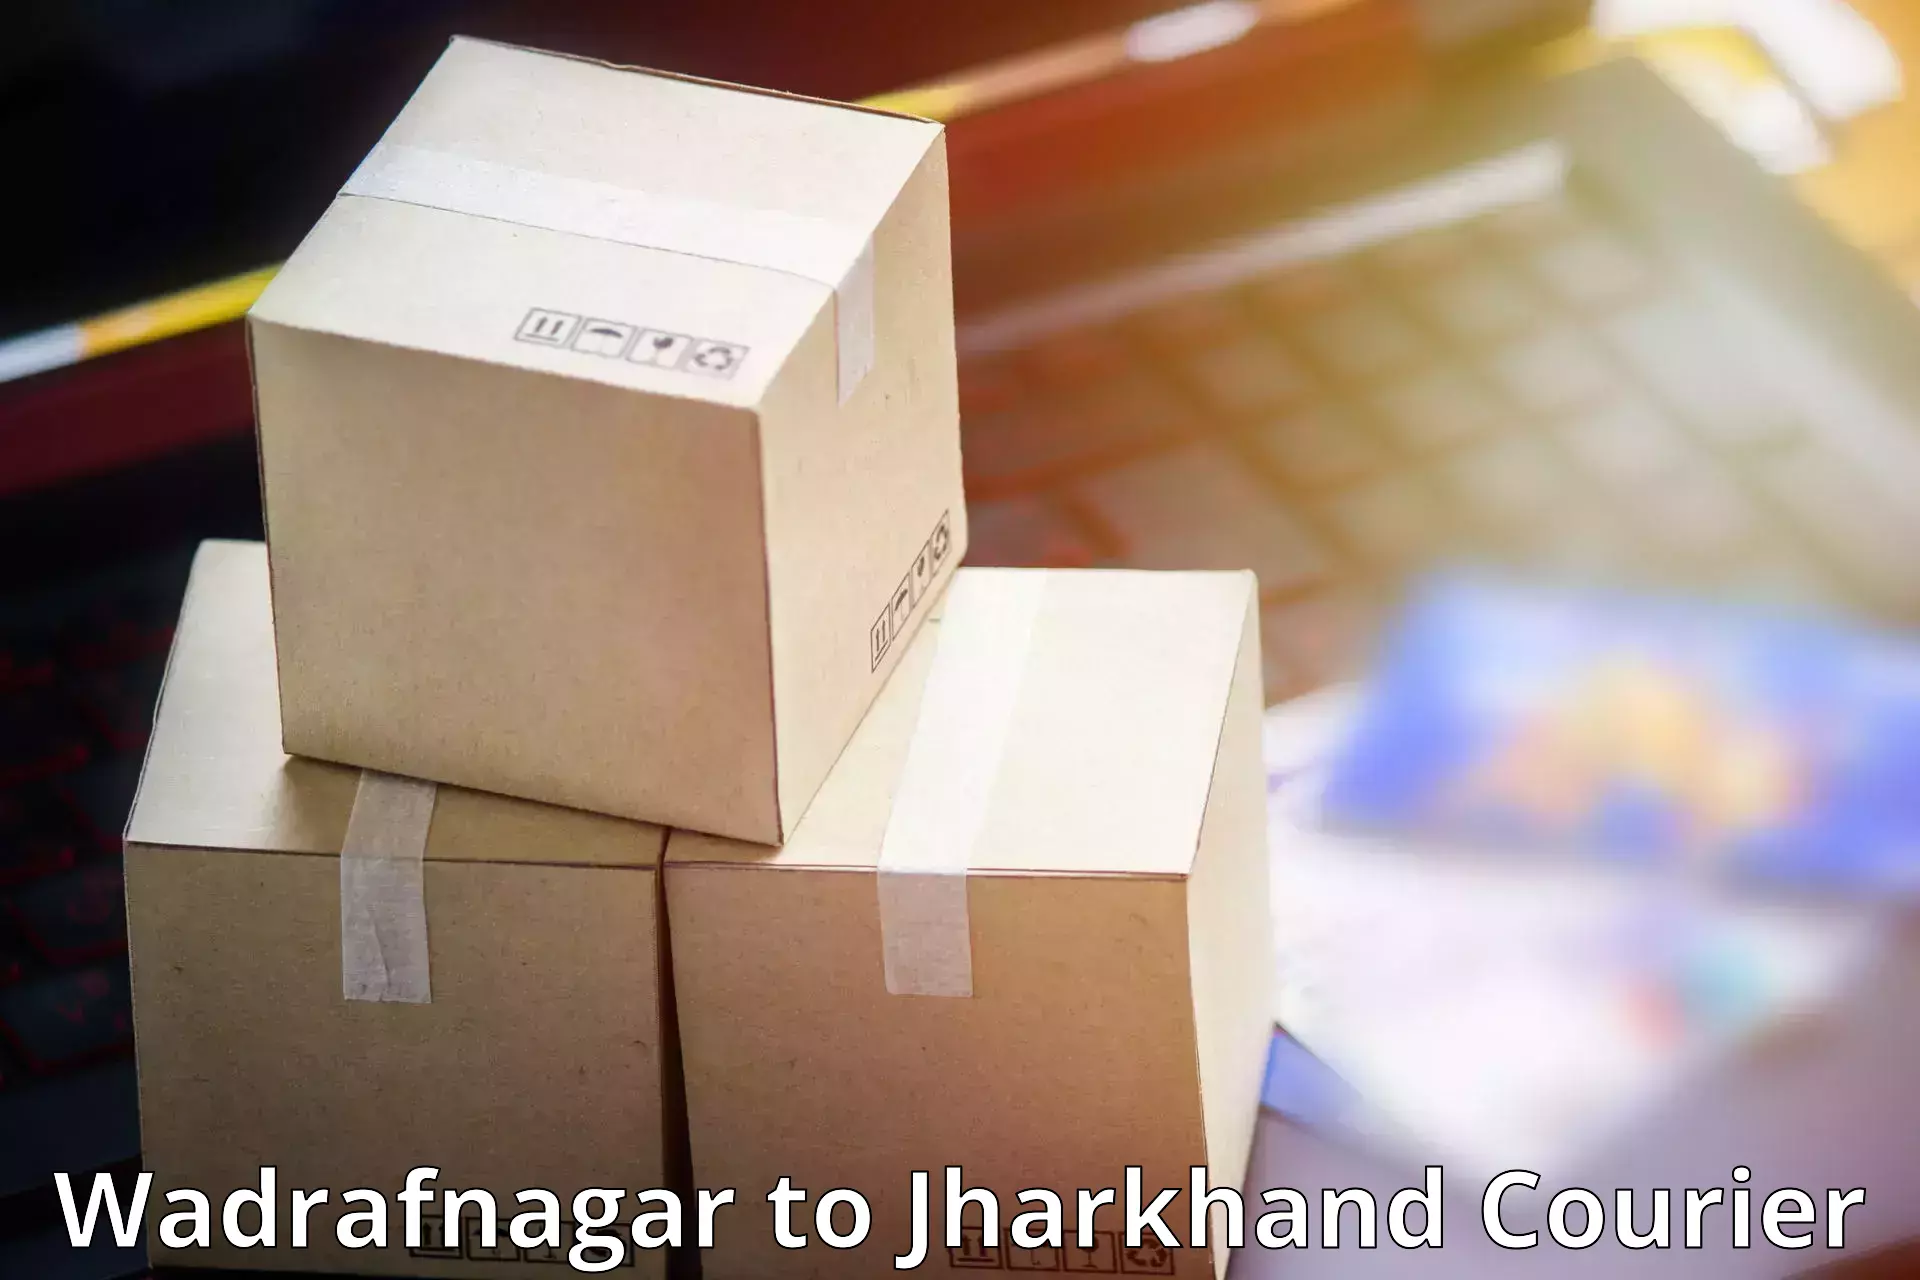 Large-scale shipping solutions Wadrafnagar to Dumka